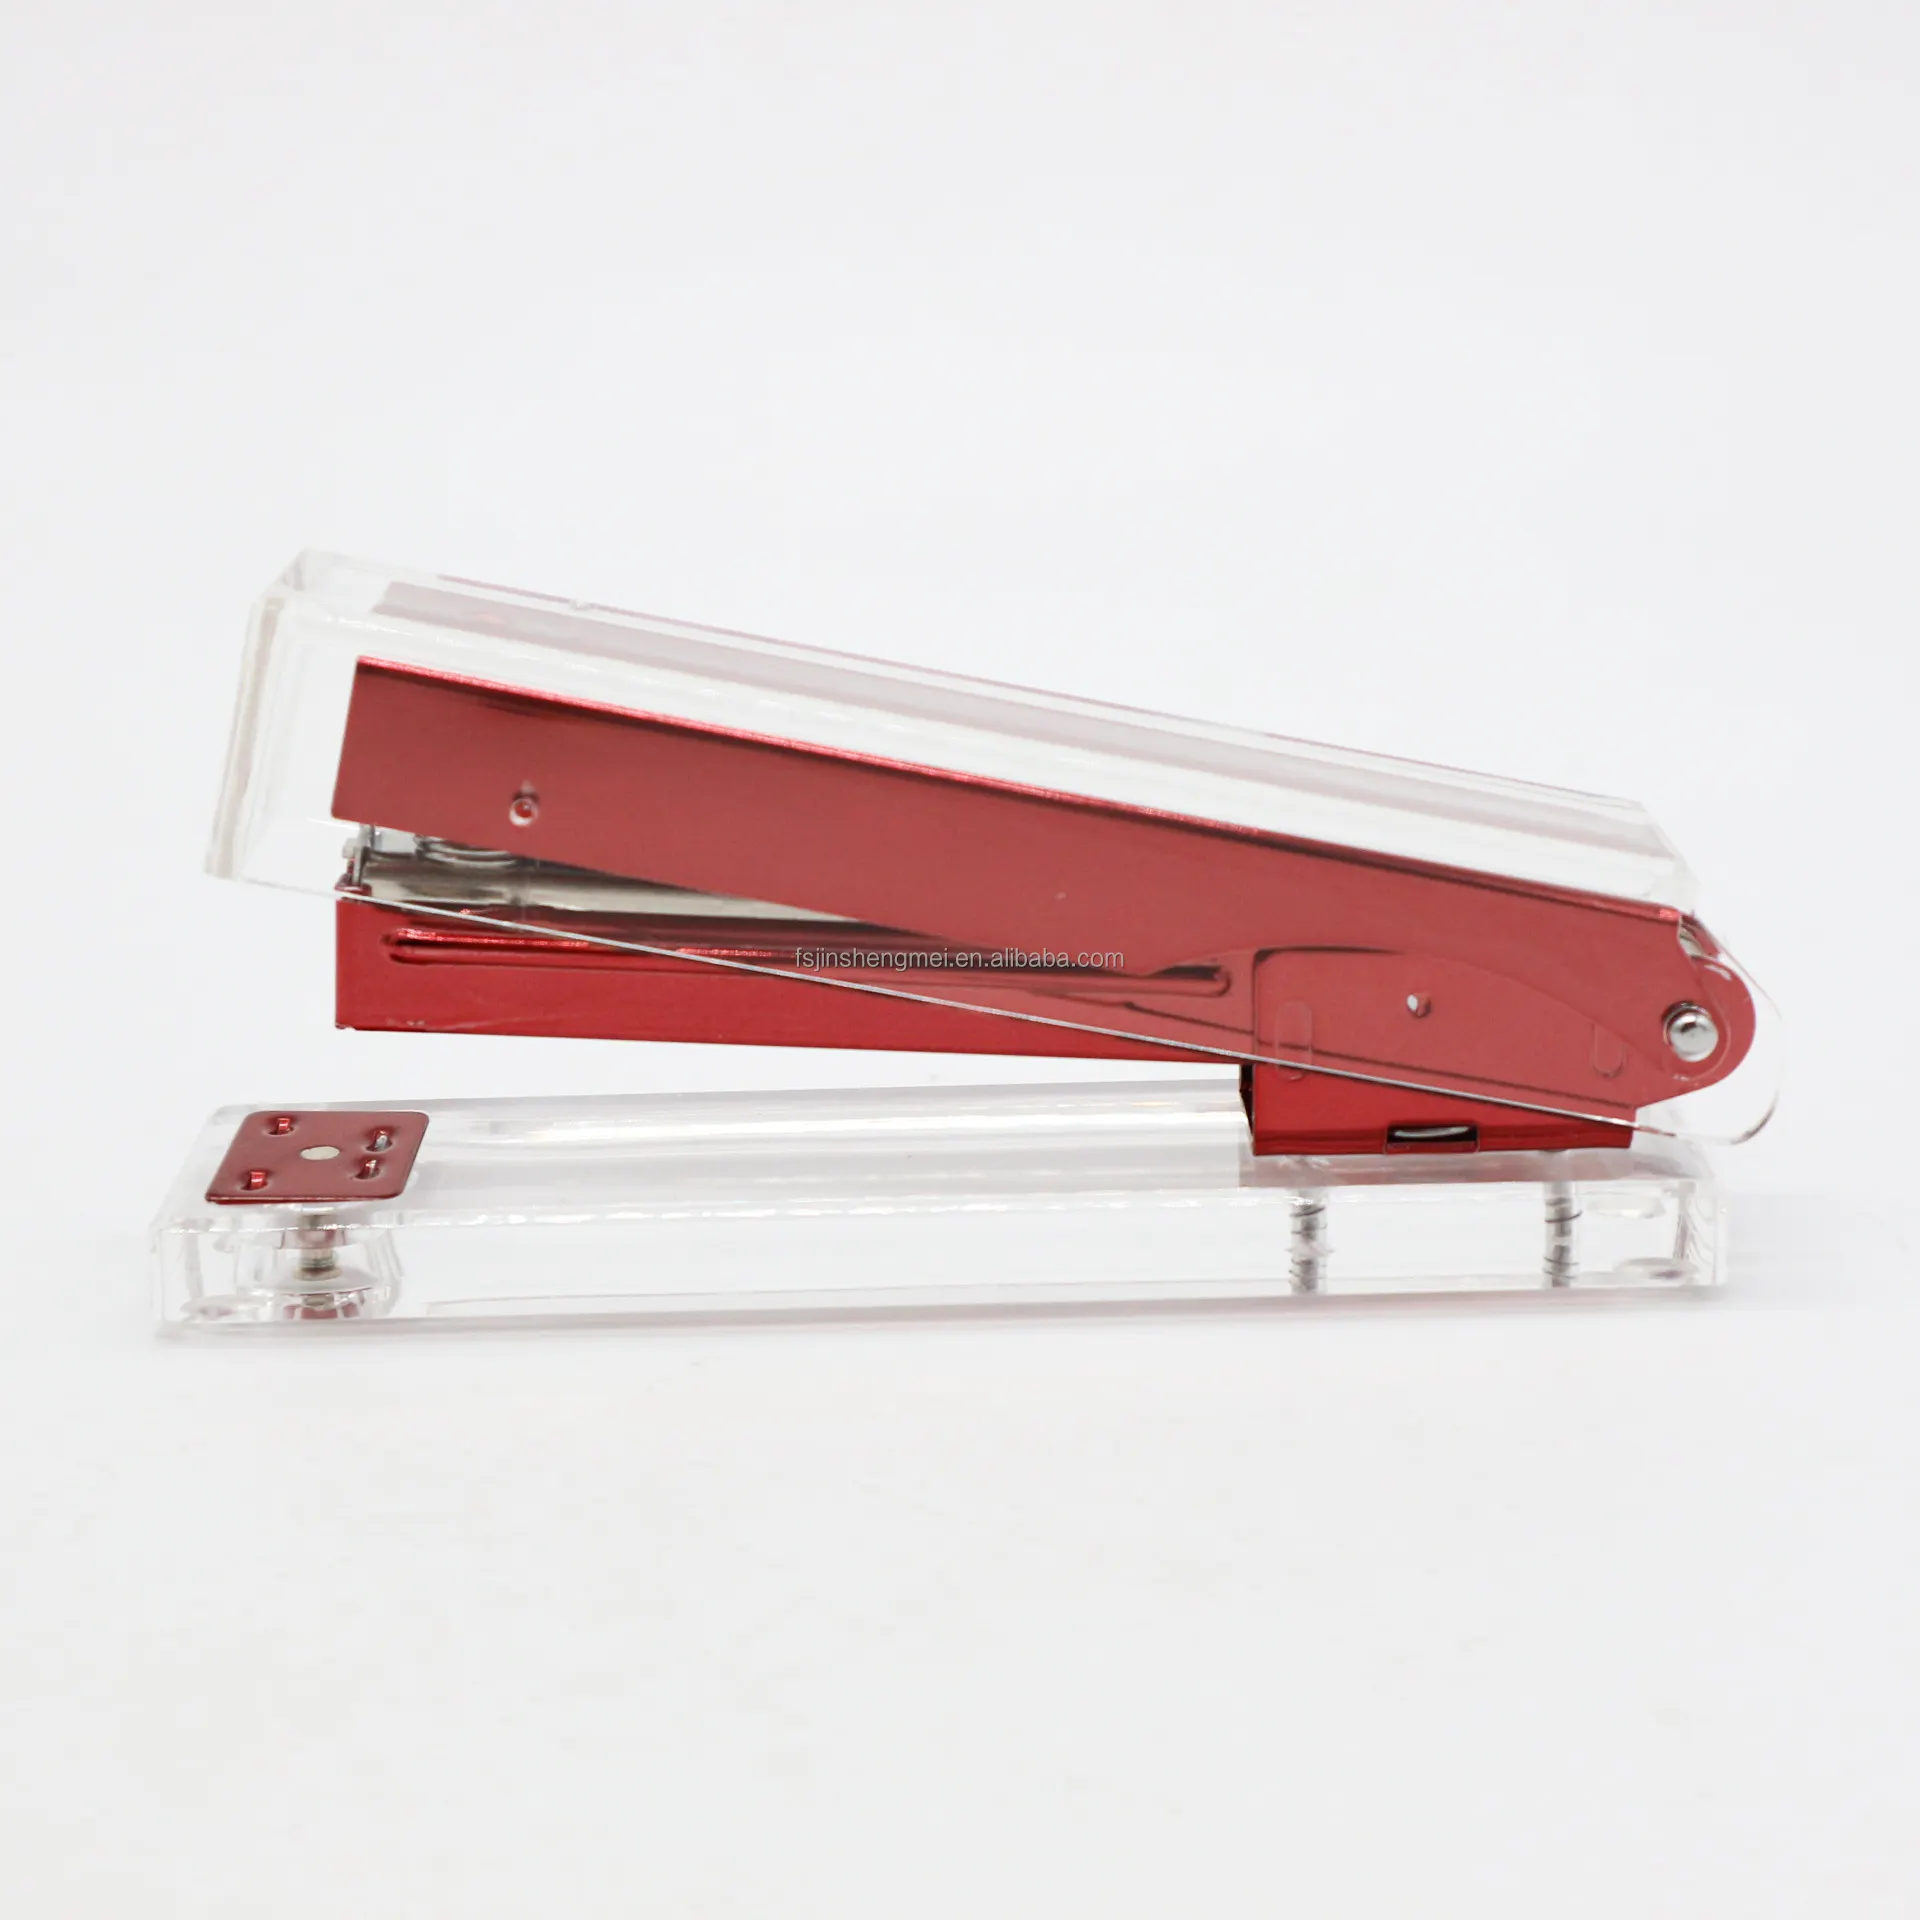 Home Office School Supplies Desktop Accessories Clear Desktop Acrylic Dark Red Stapler Book Sewer Set with 26/6 24/6 Staples